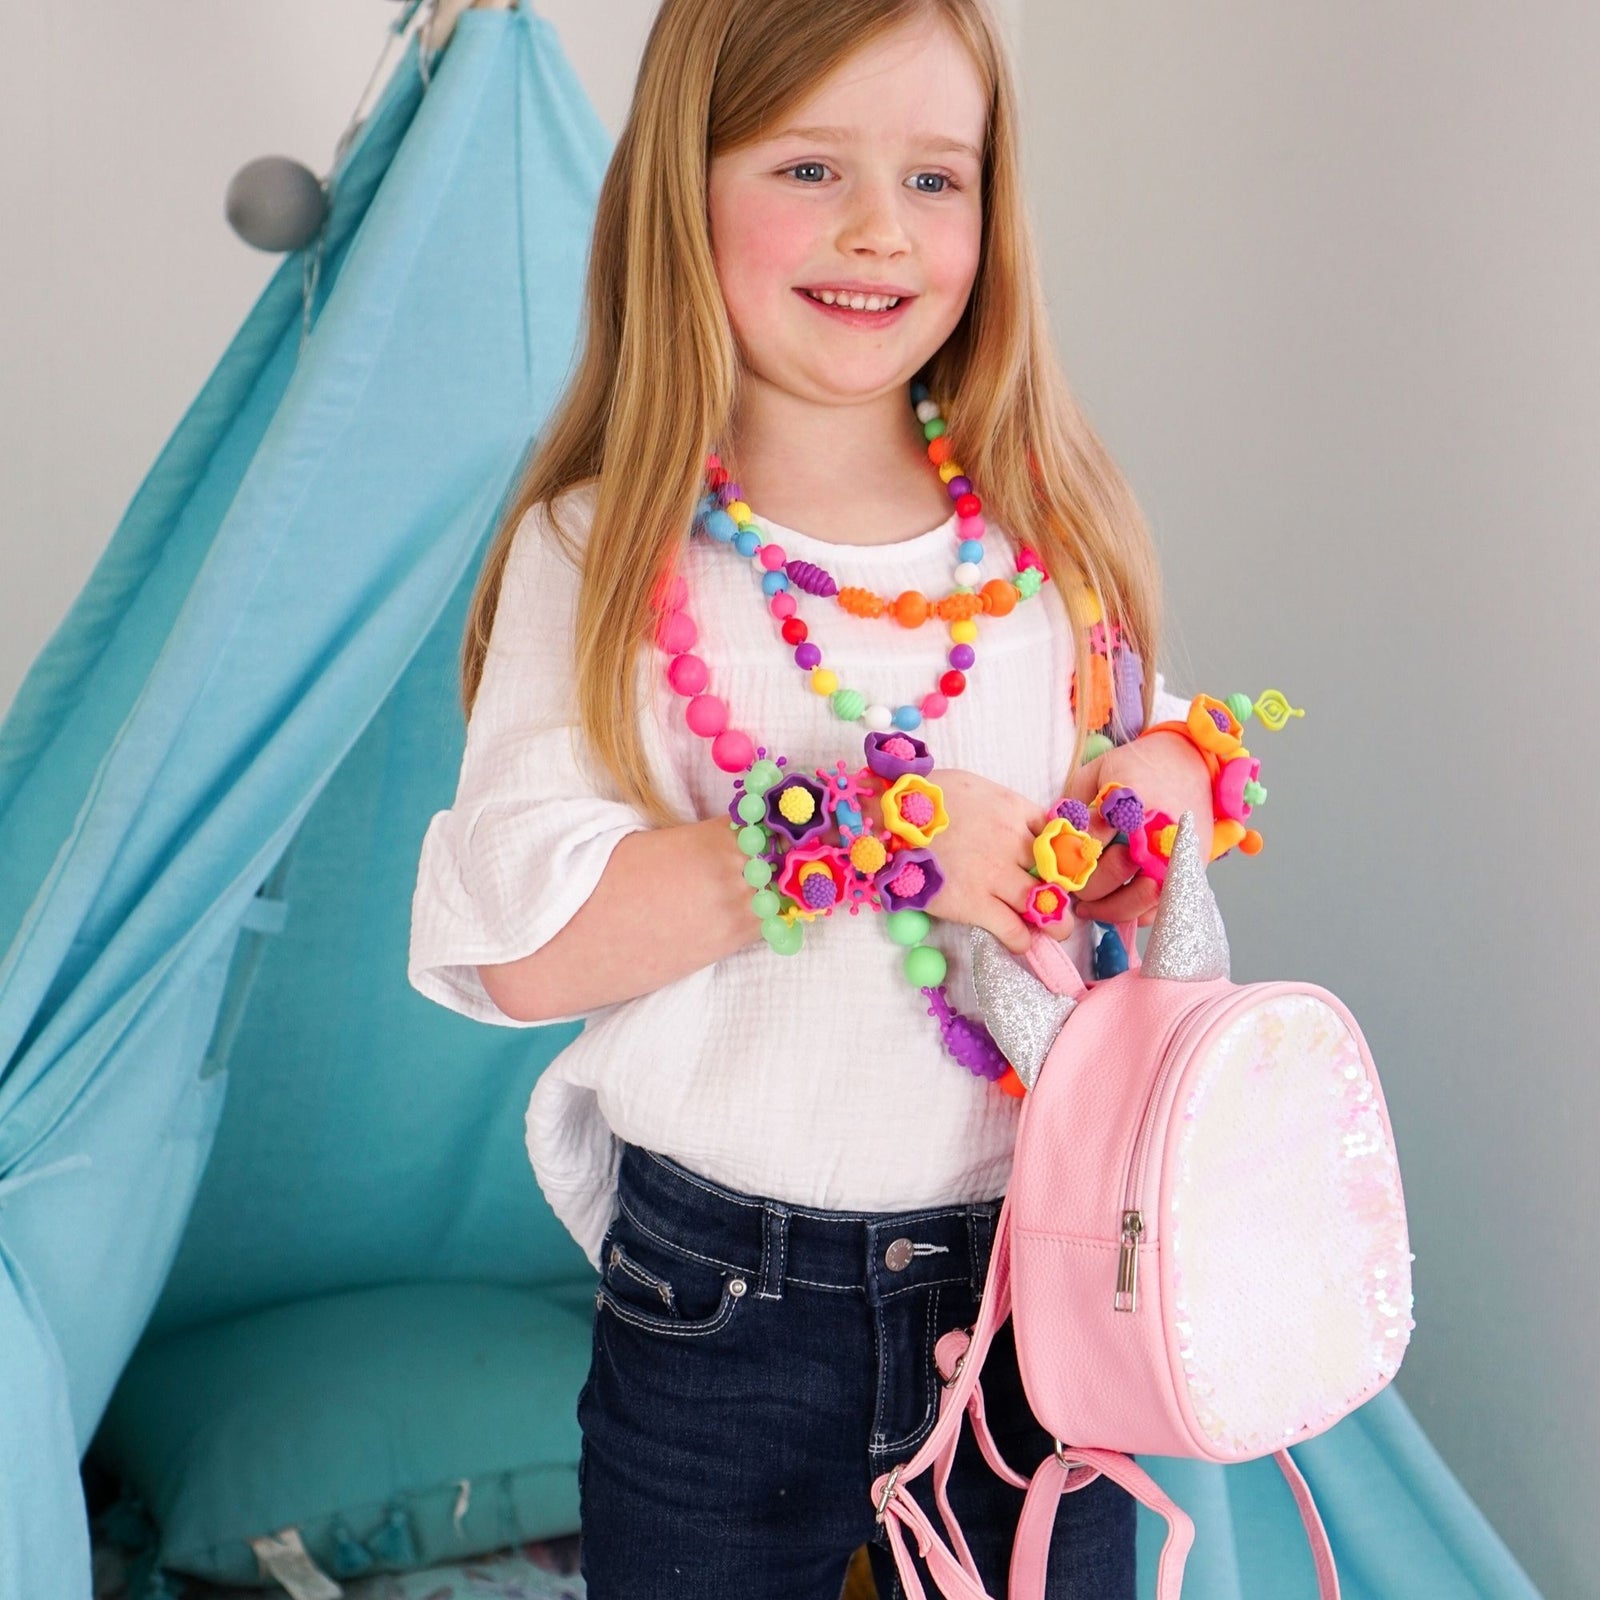 Large Pop Beads Girls Jewelry Making Kit, Kids Sequin Bag